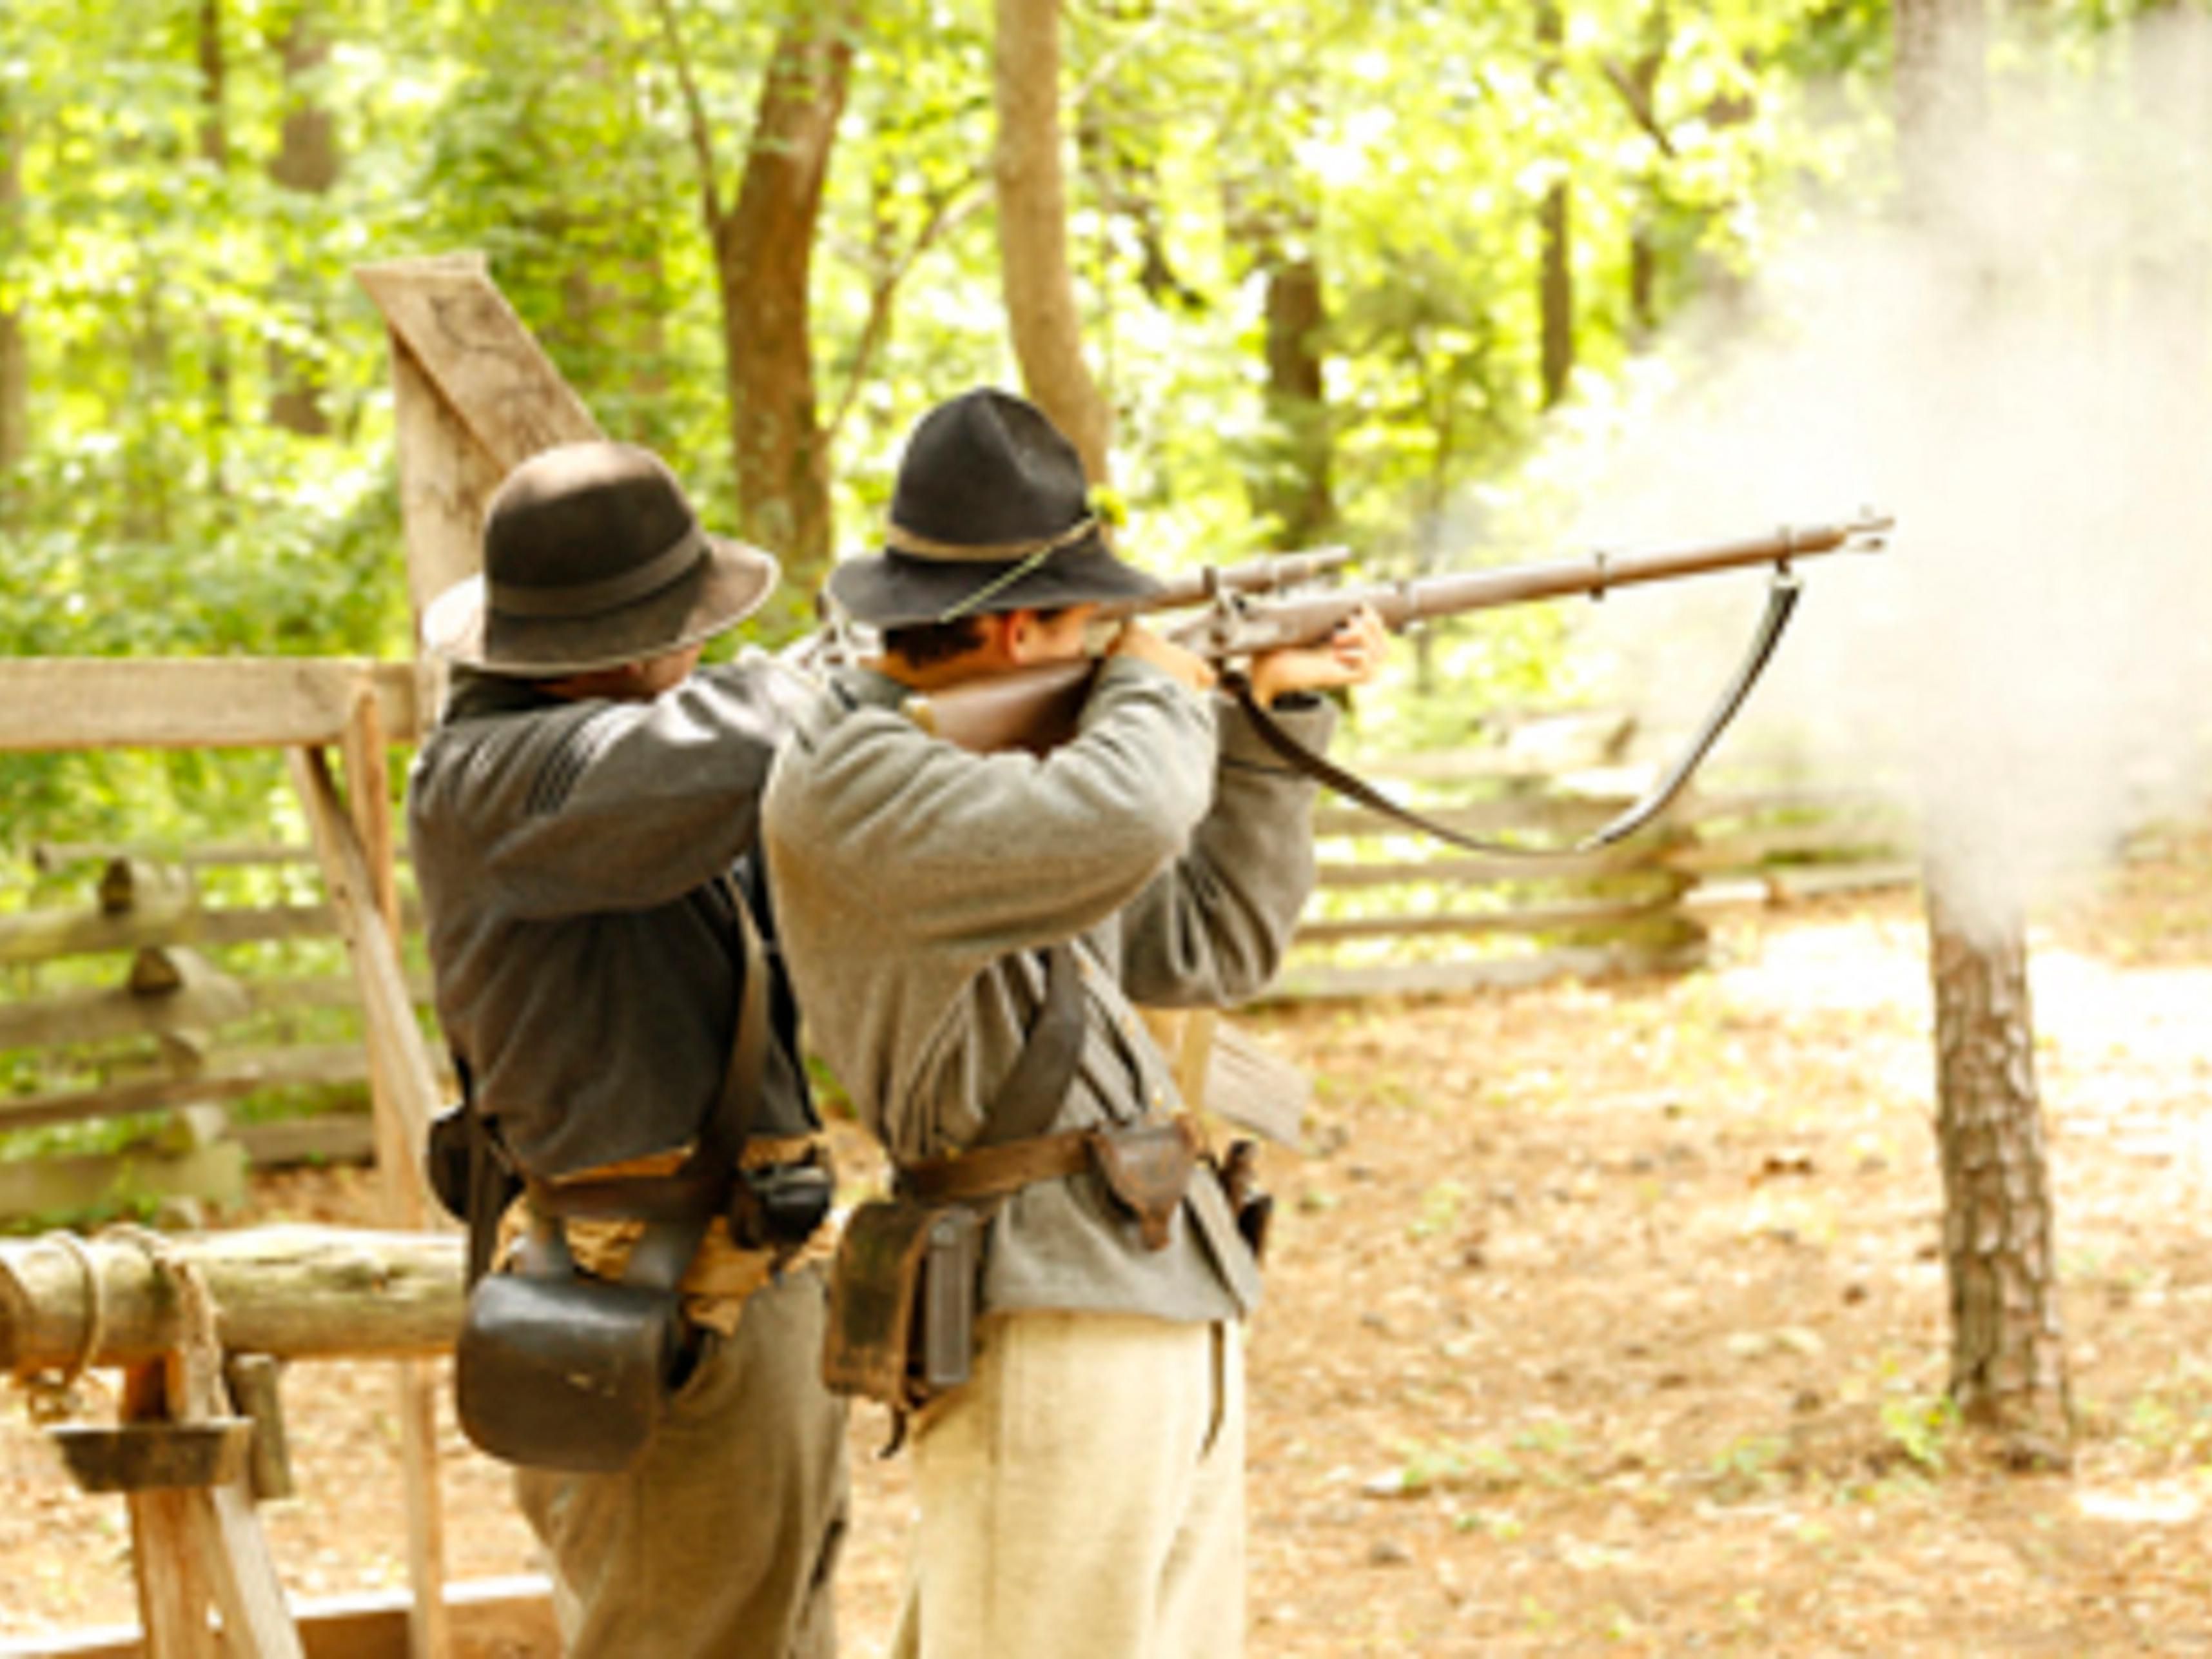 Enjoy Pamplin Park's Historical Rifle Demonstration